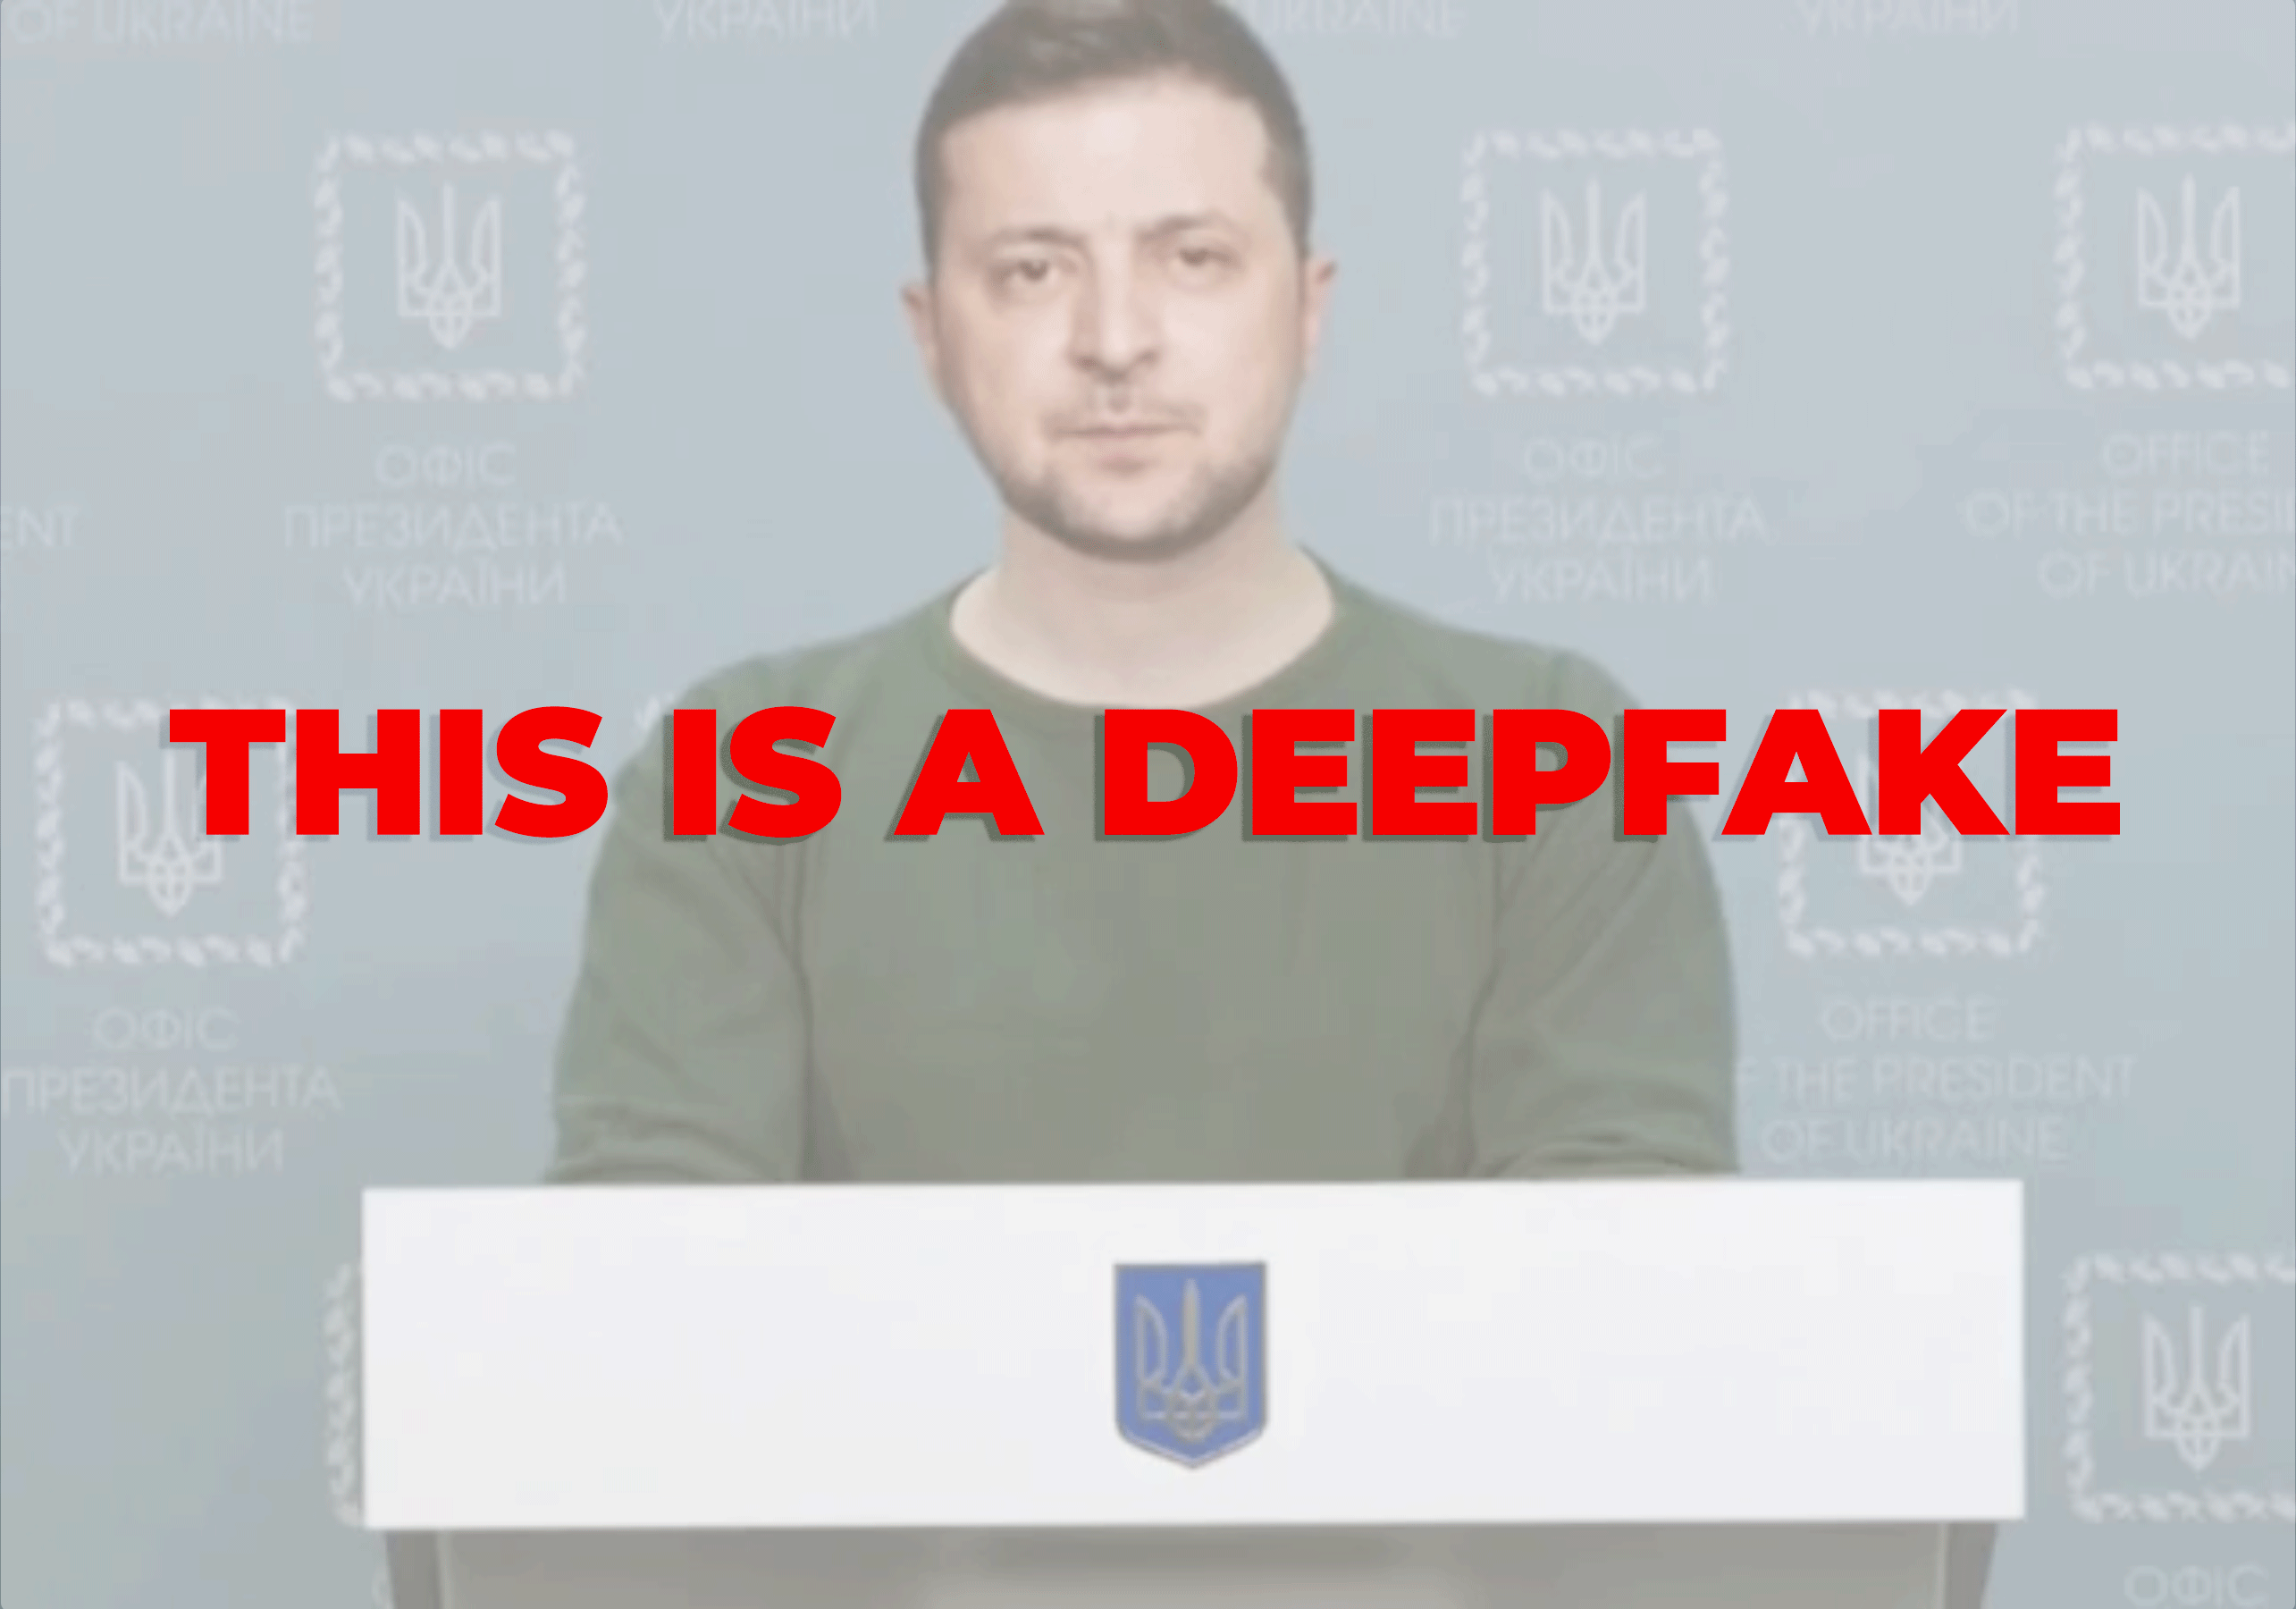 Russian War Report: Hacked news program and deepfake video spread false Zelenskyy claims